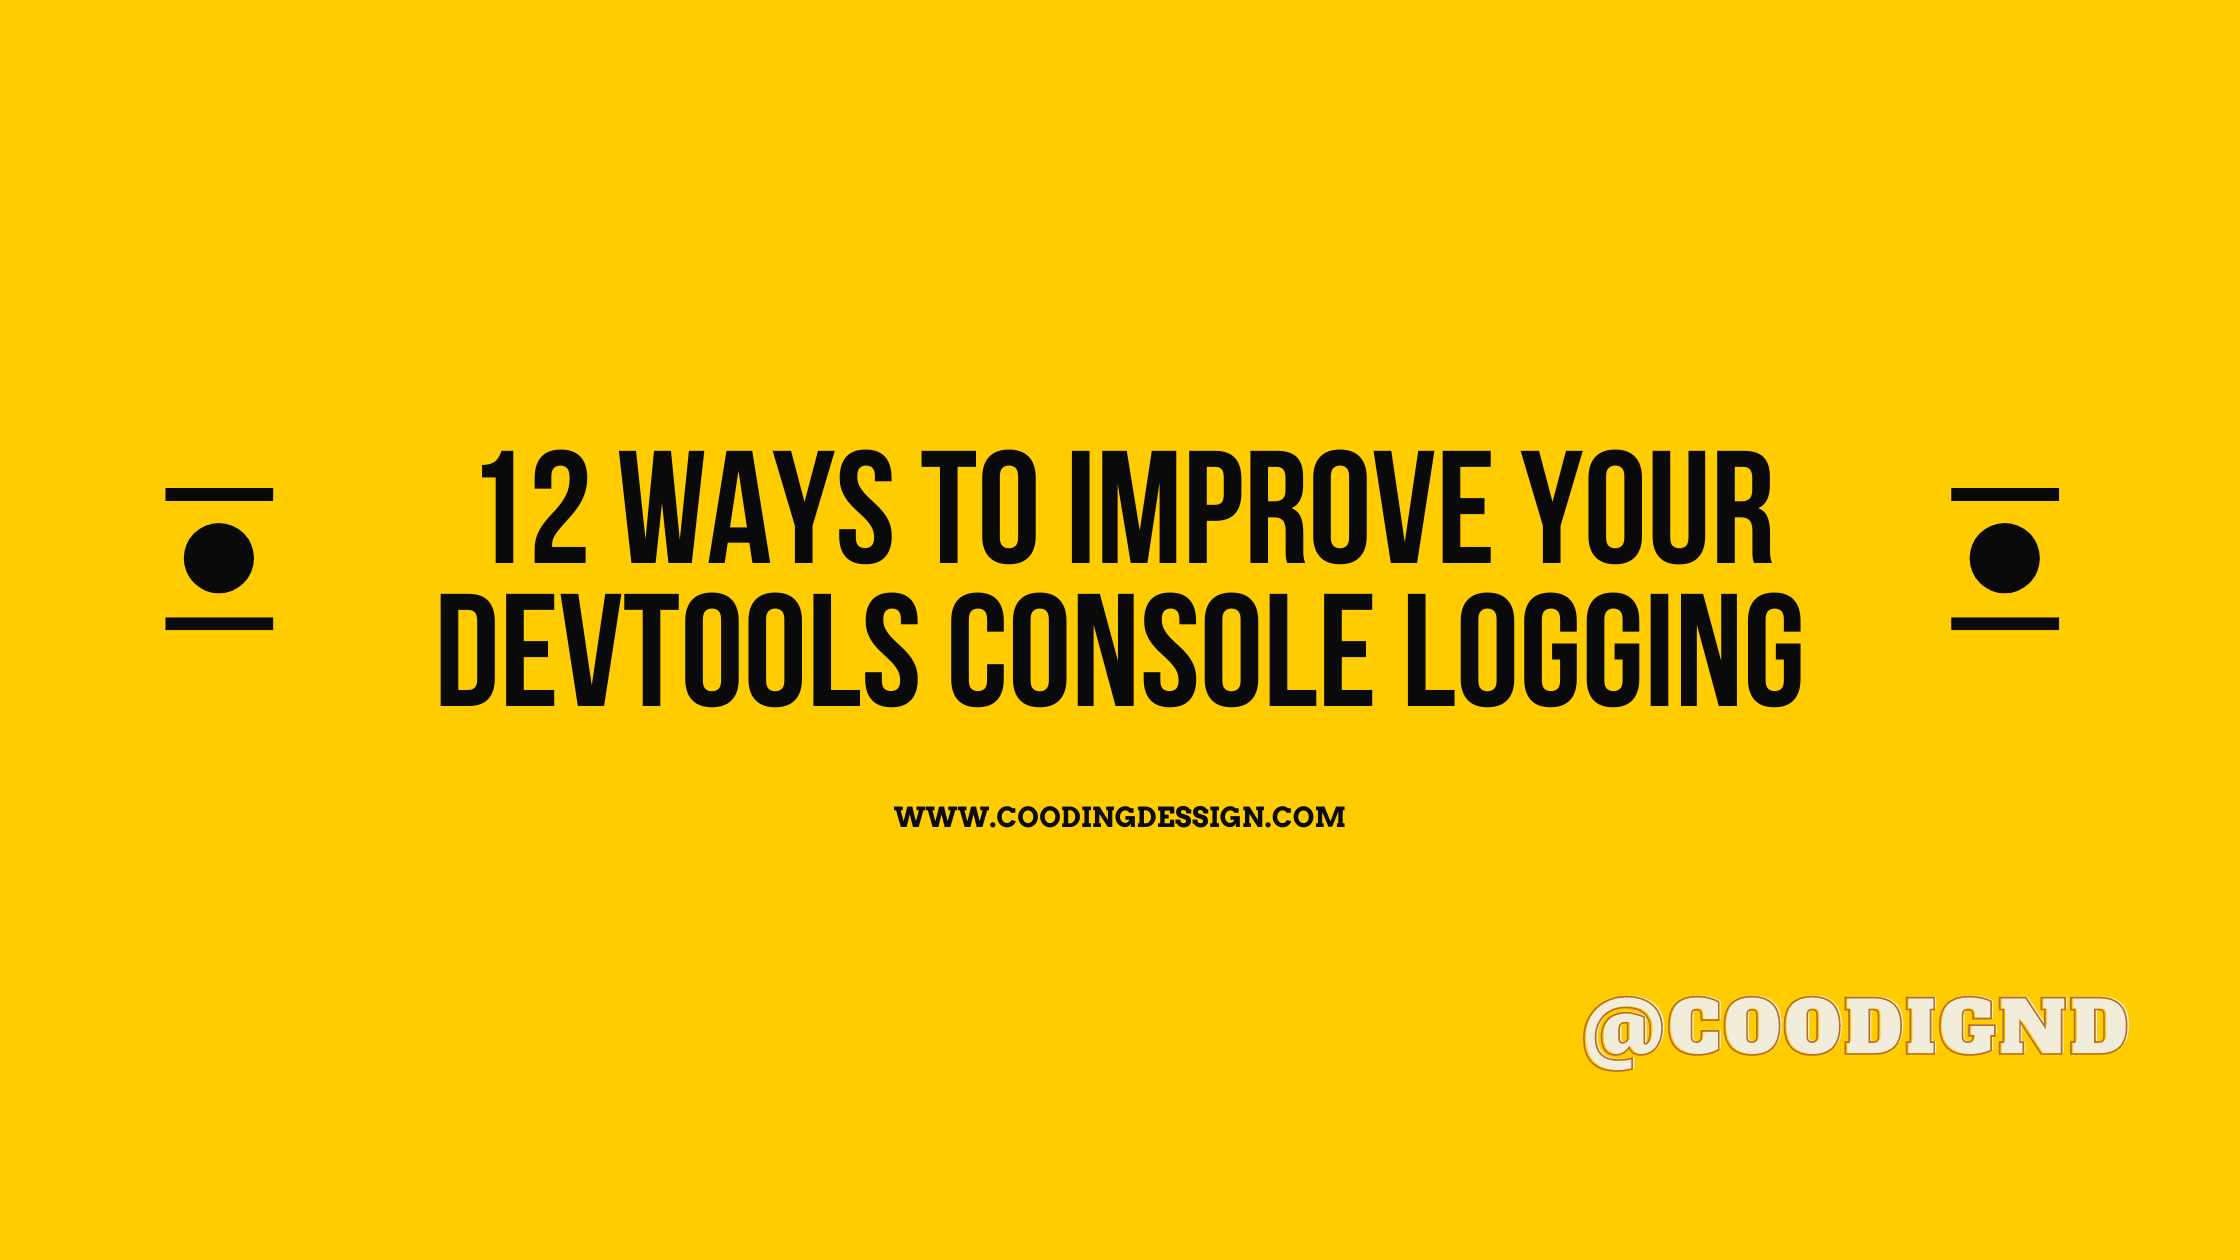 12 Ways to Improve Your DevTools Console Logging